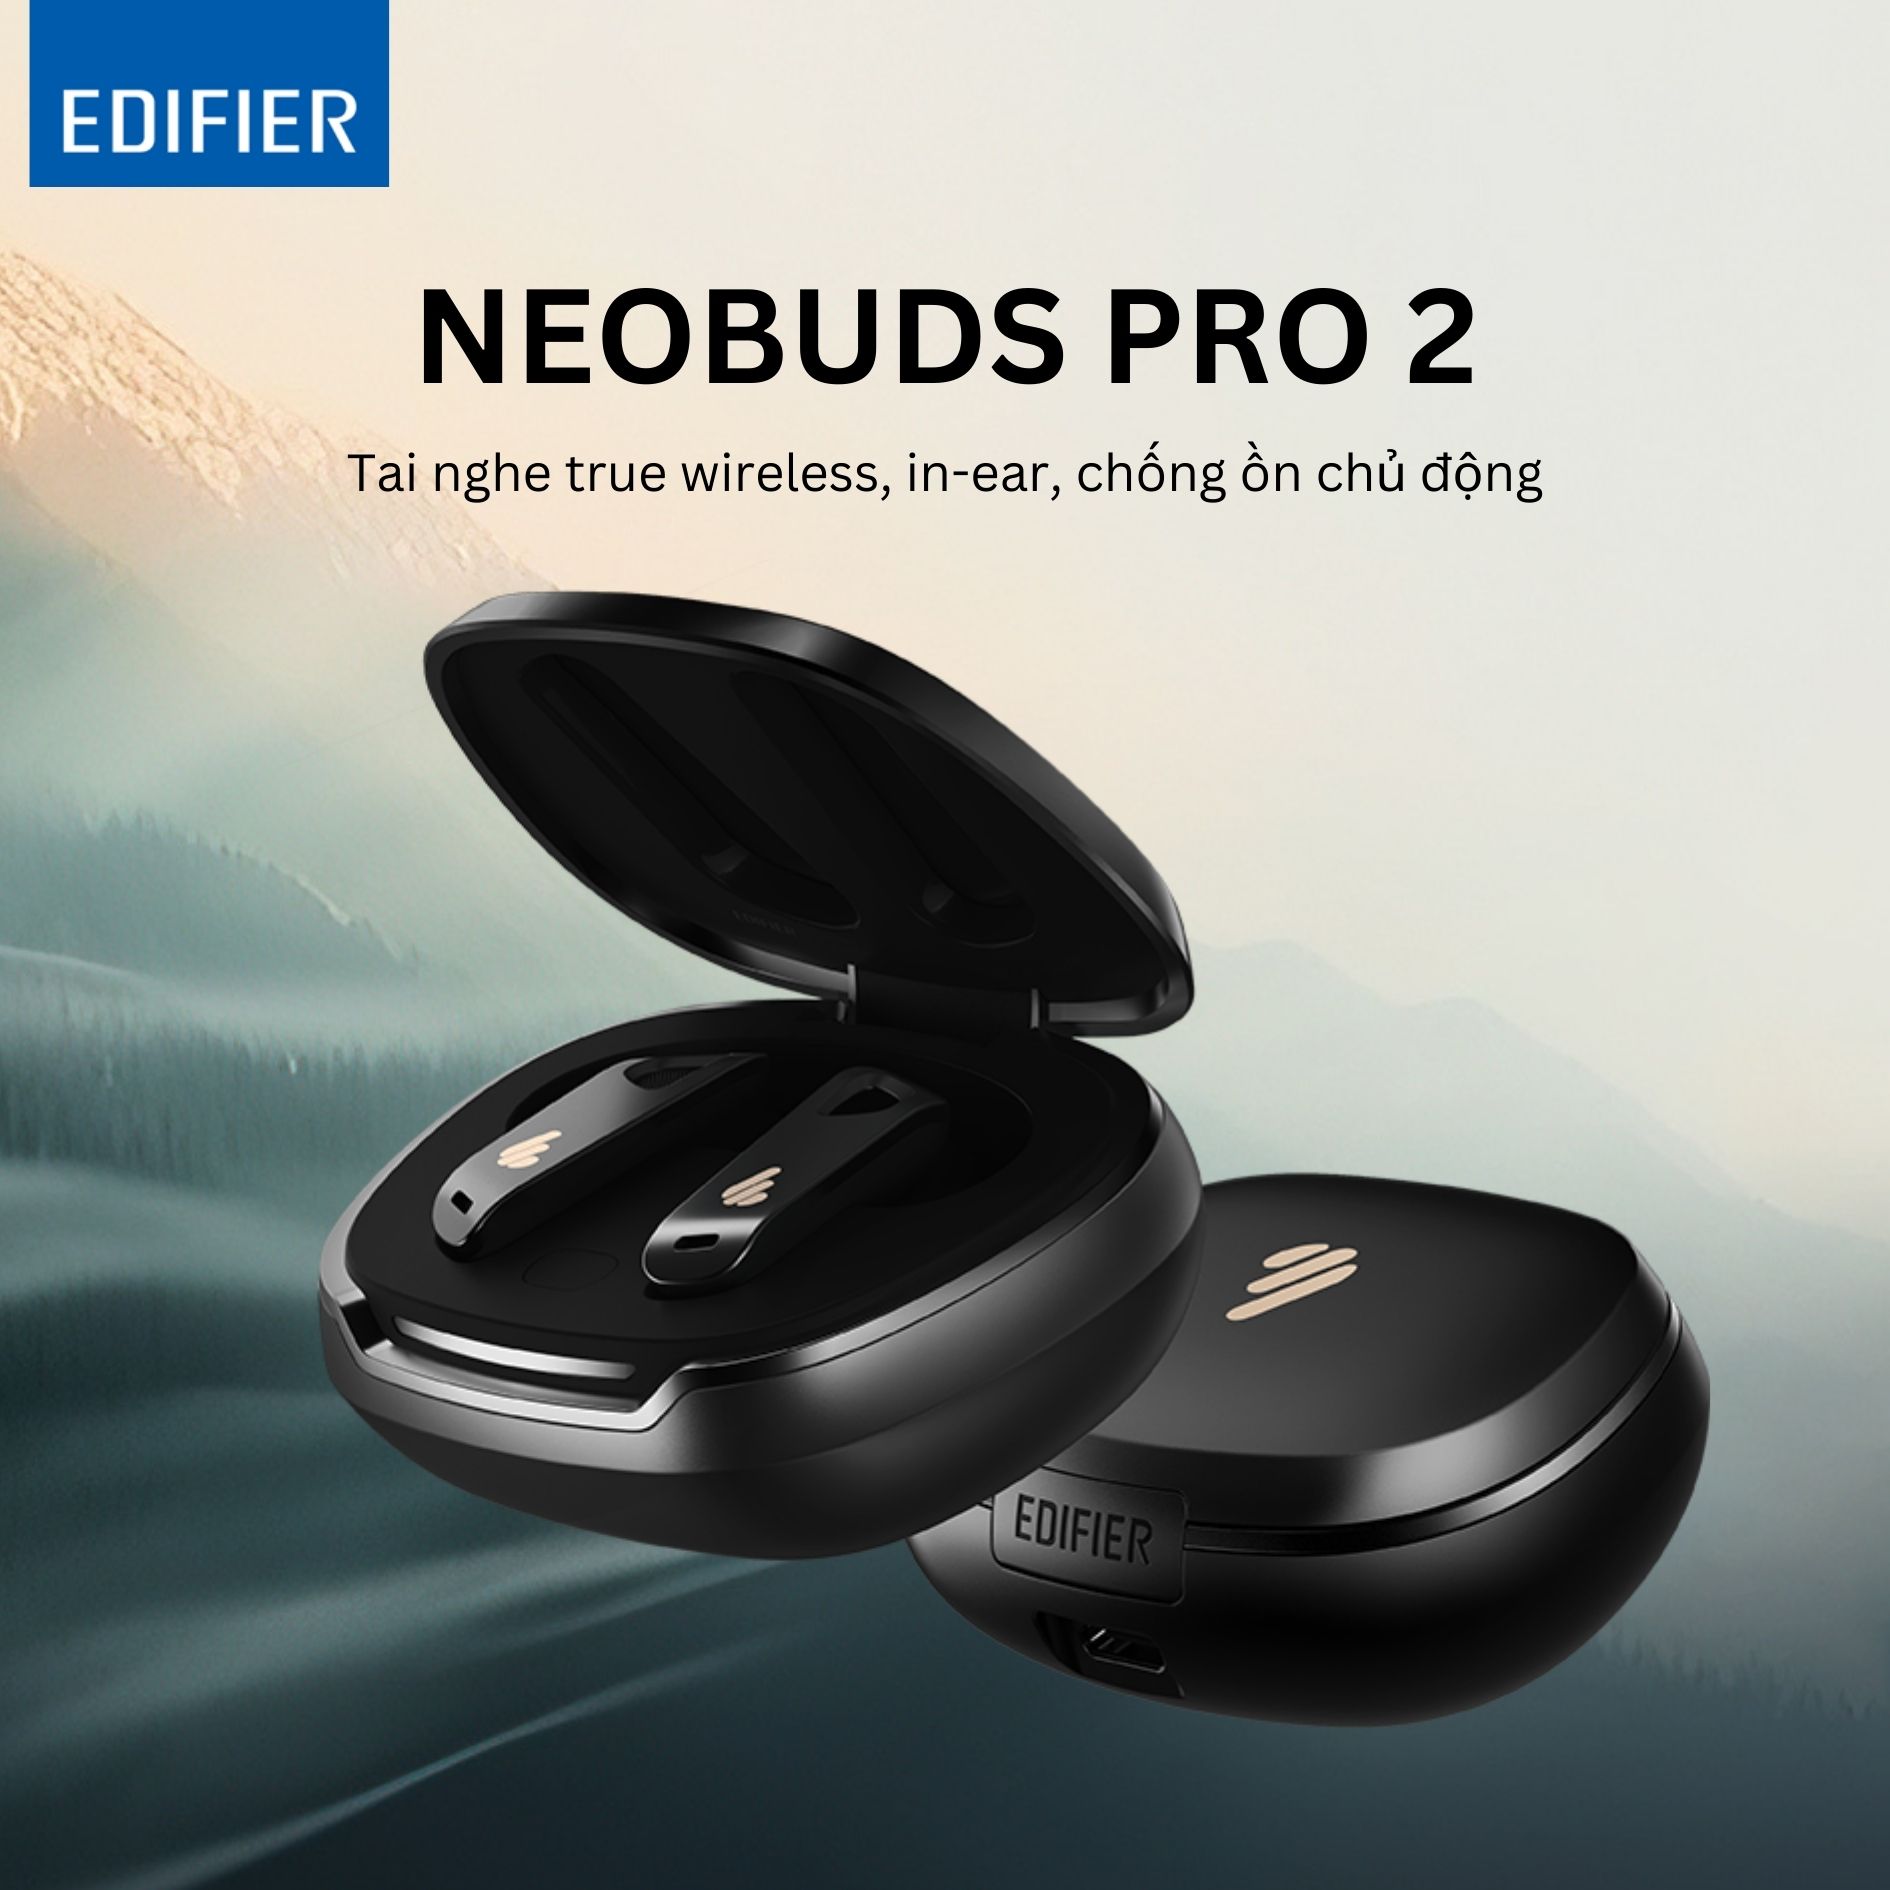 Tai nghe Edifier Neobuds Pro 2